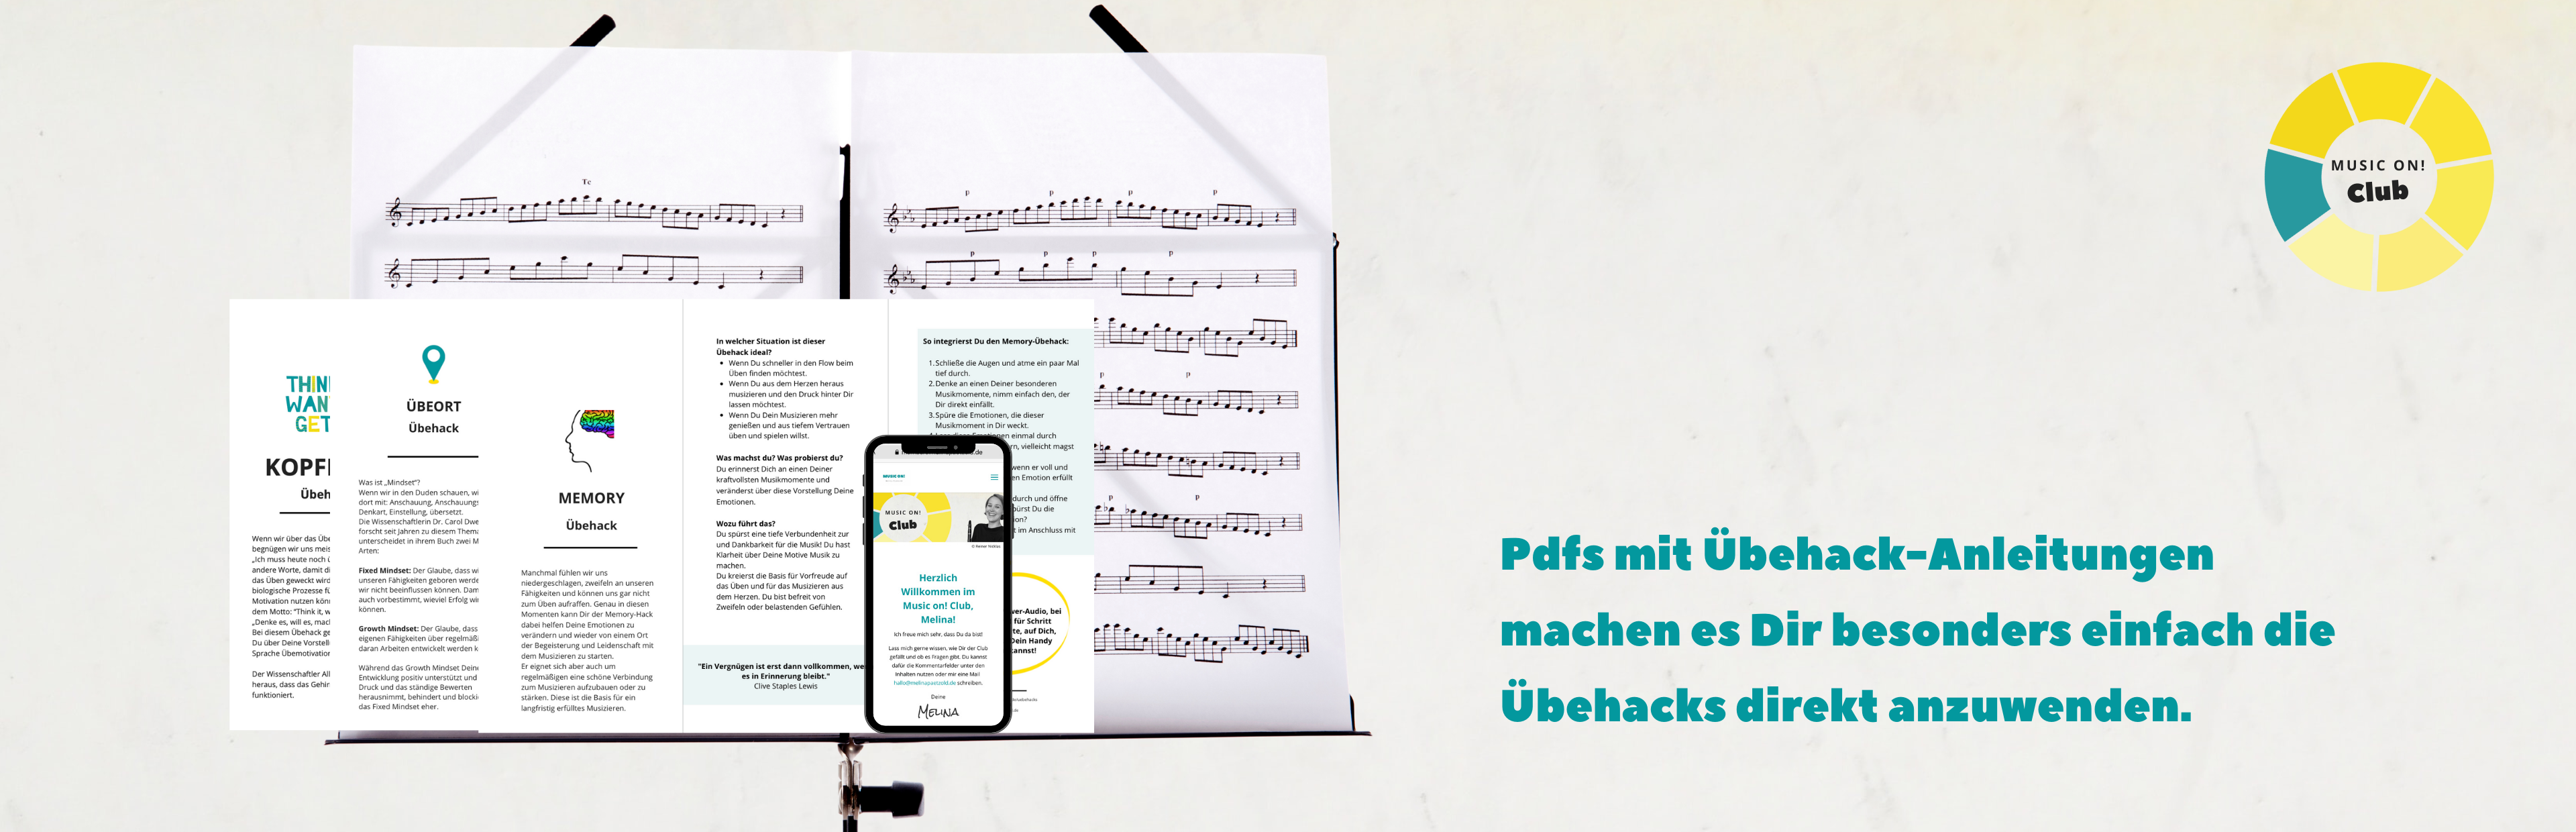 uebeplattform music on club mockup pdf melinapaetzold